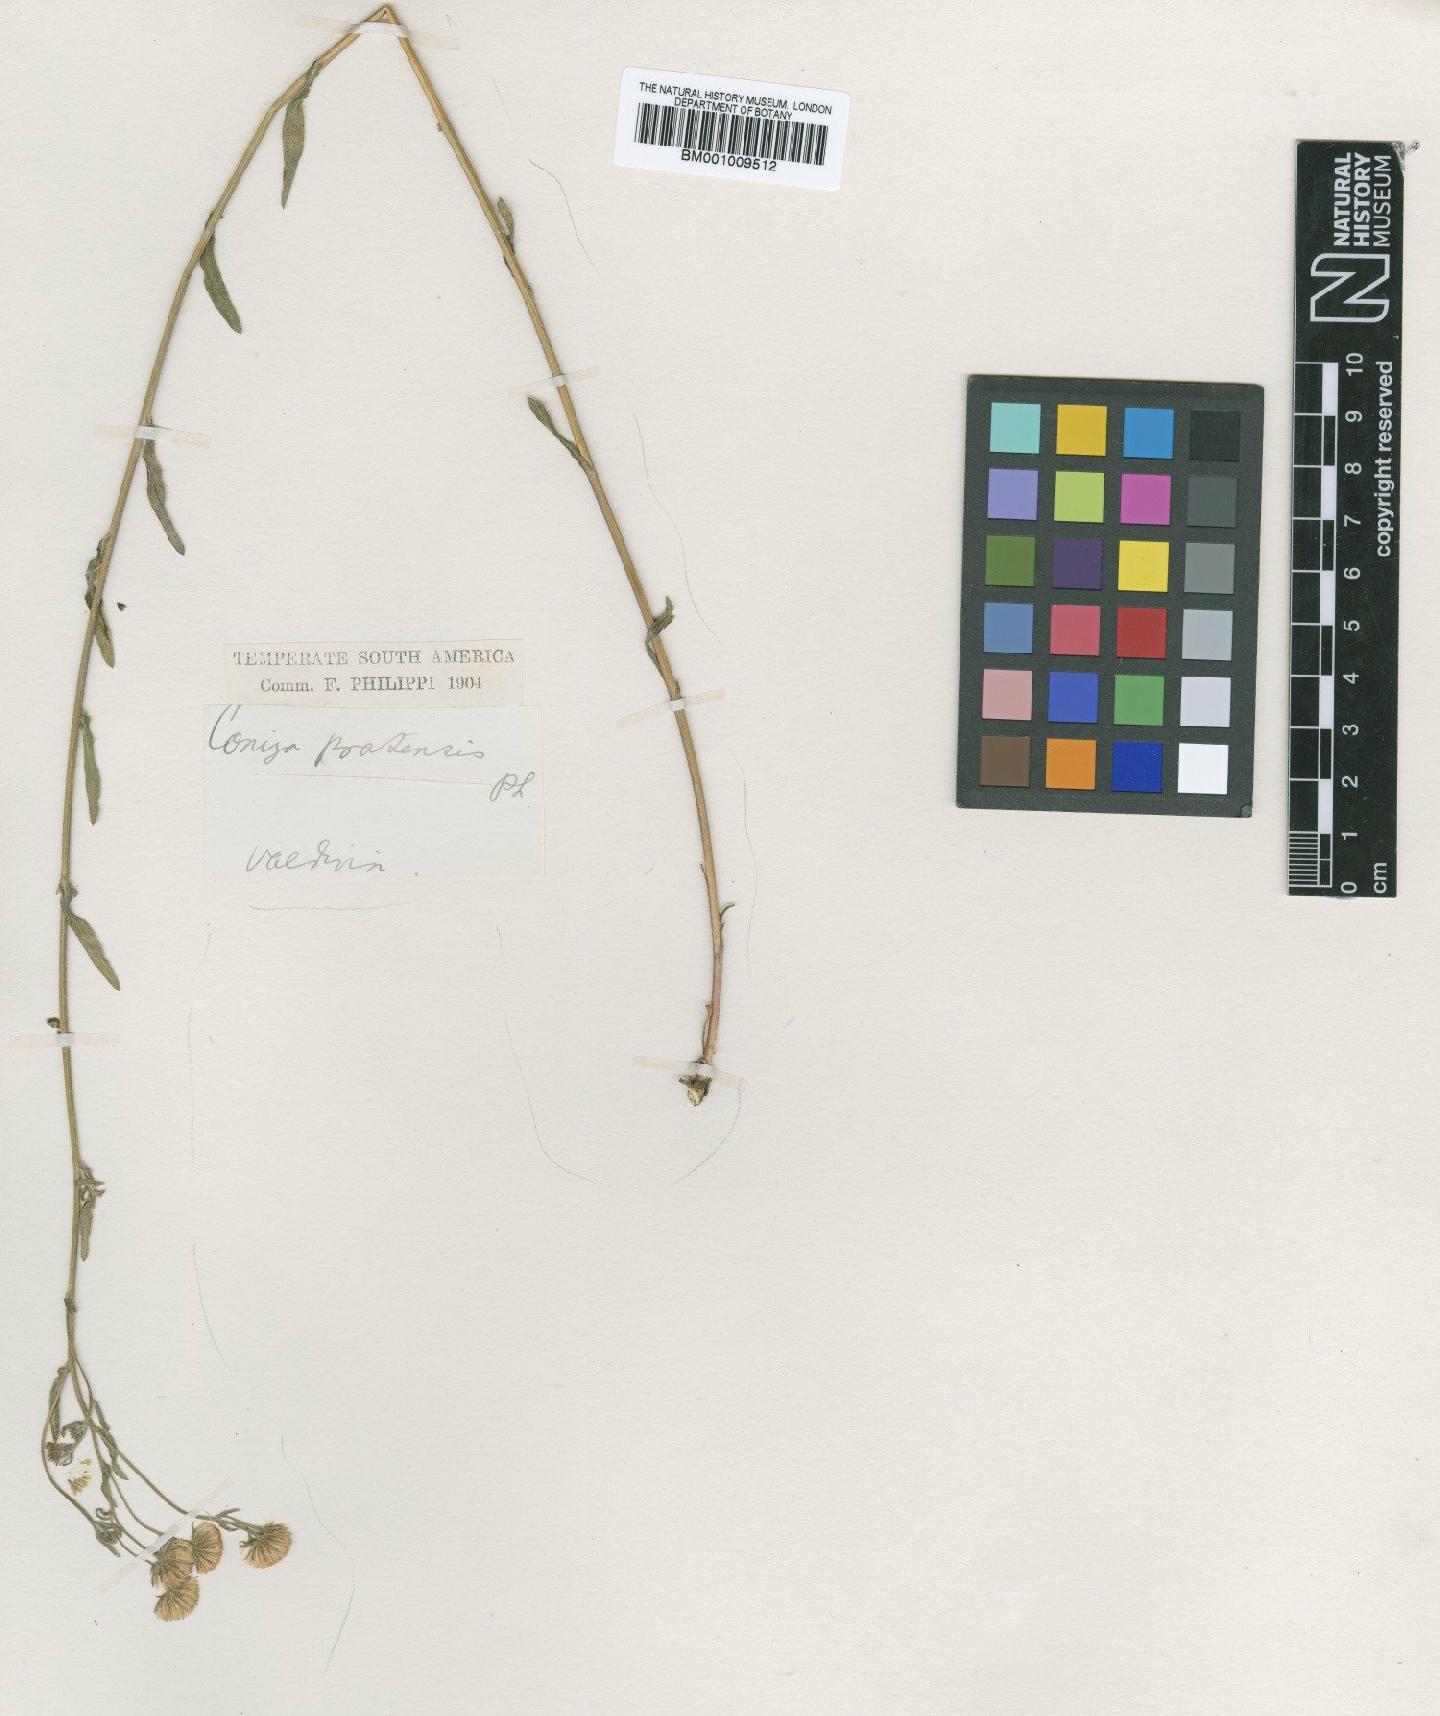 To NHMUK collection (Conyza pratensis Philippi; NHMUK:ecatalogue:611950)